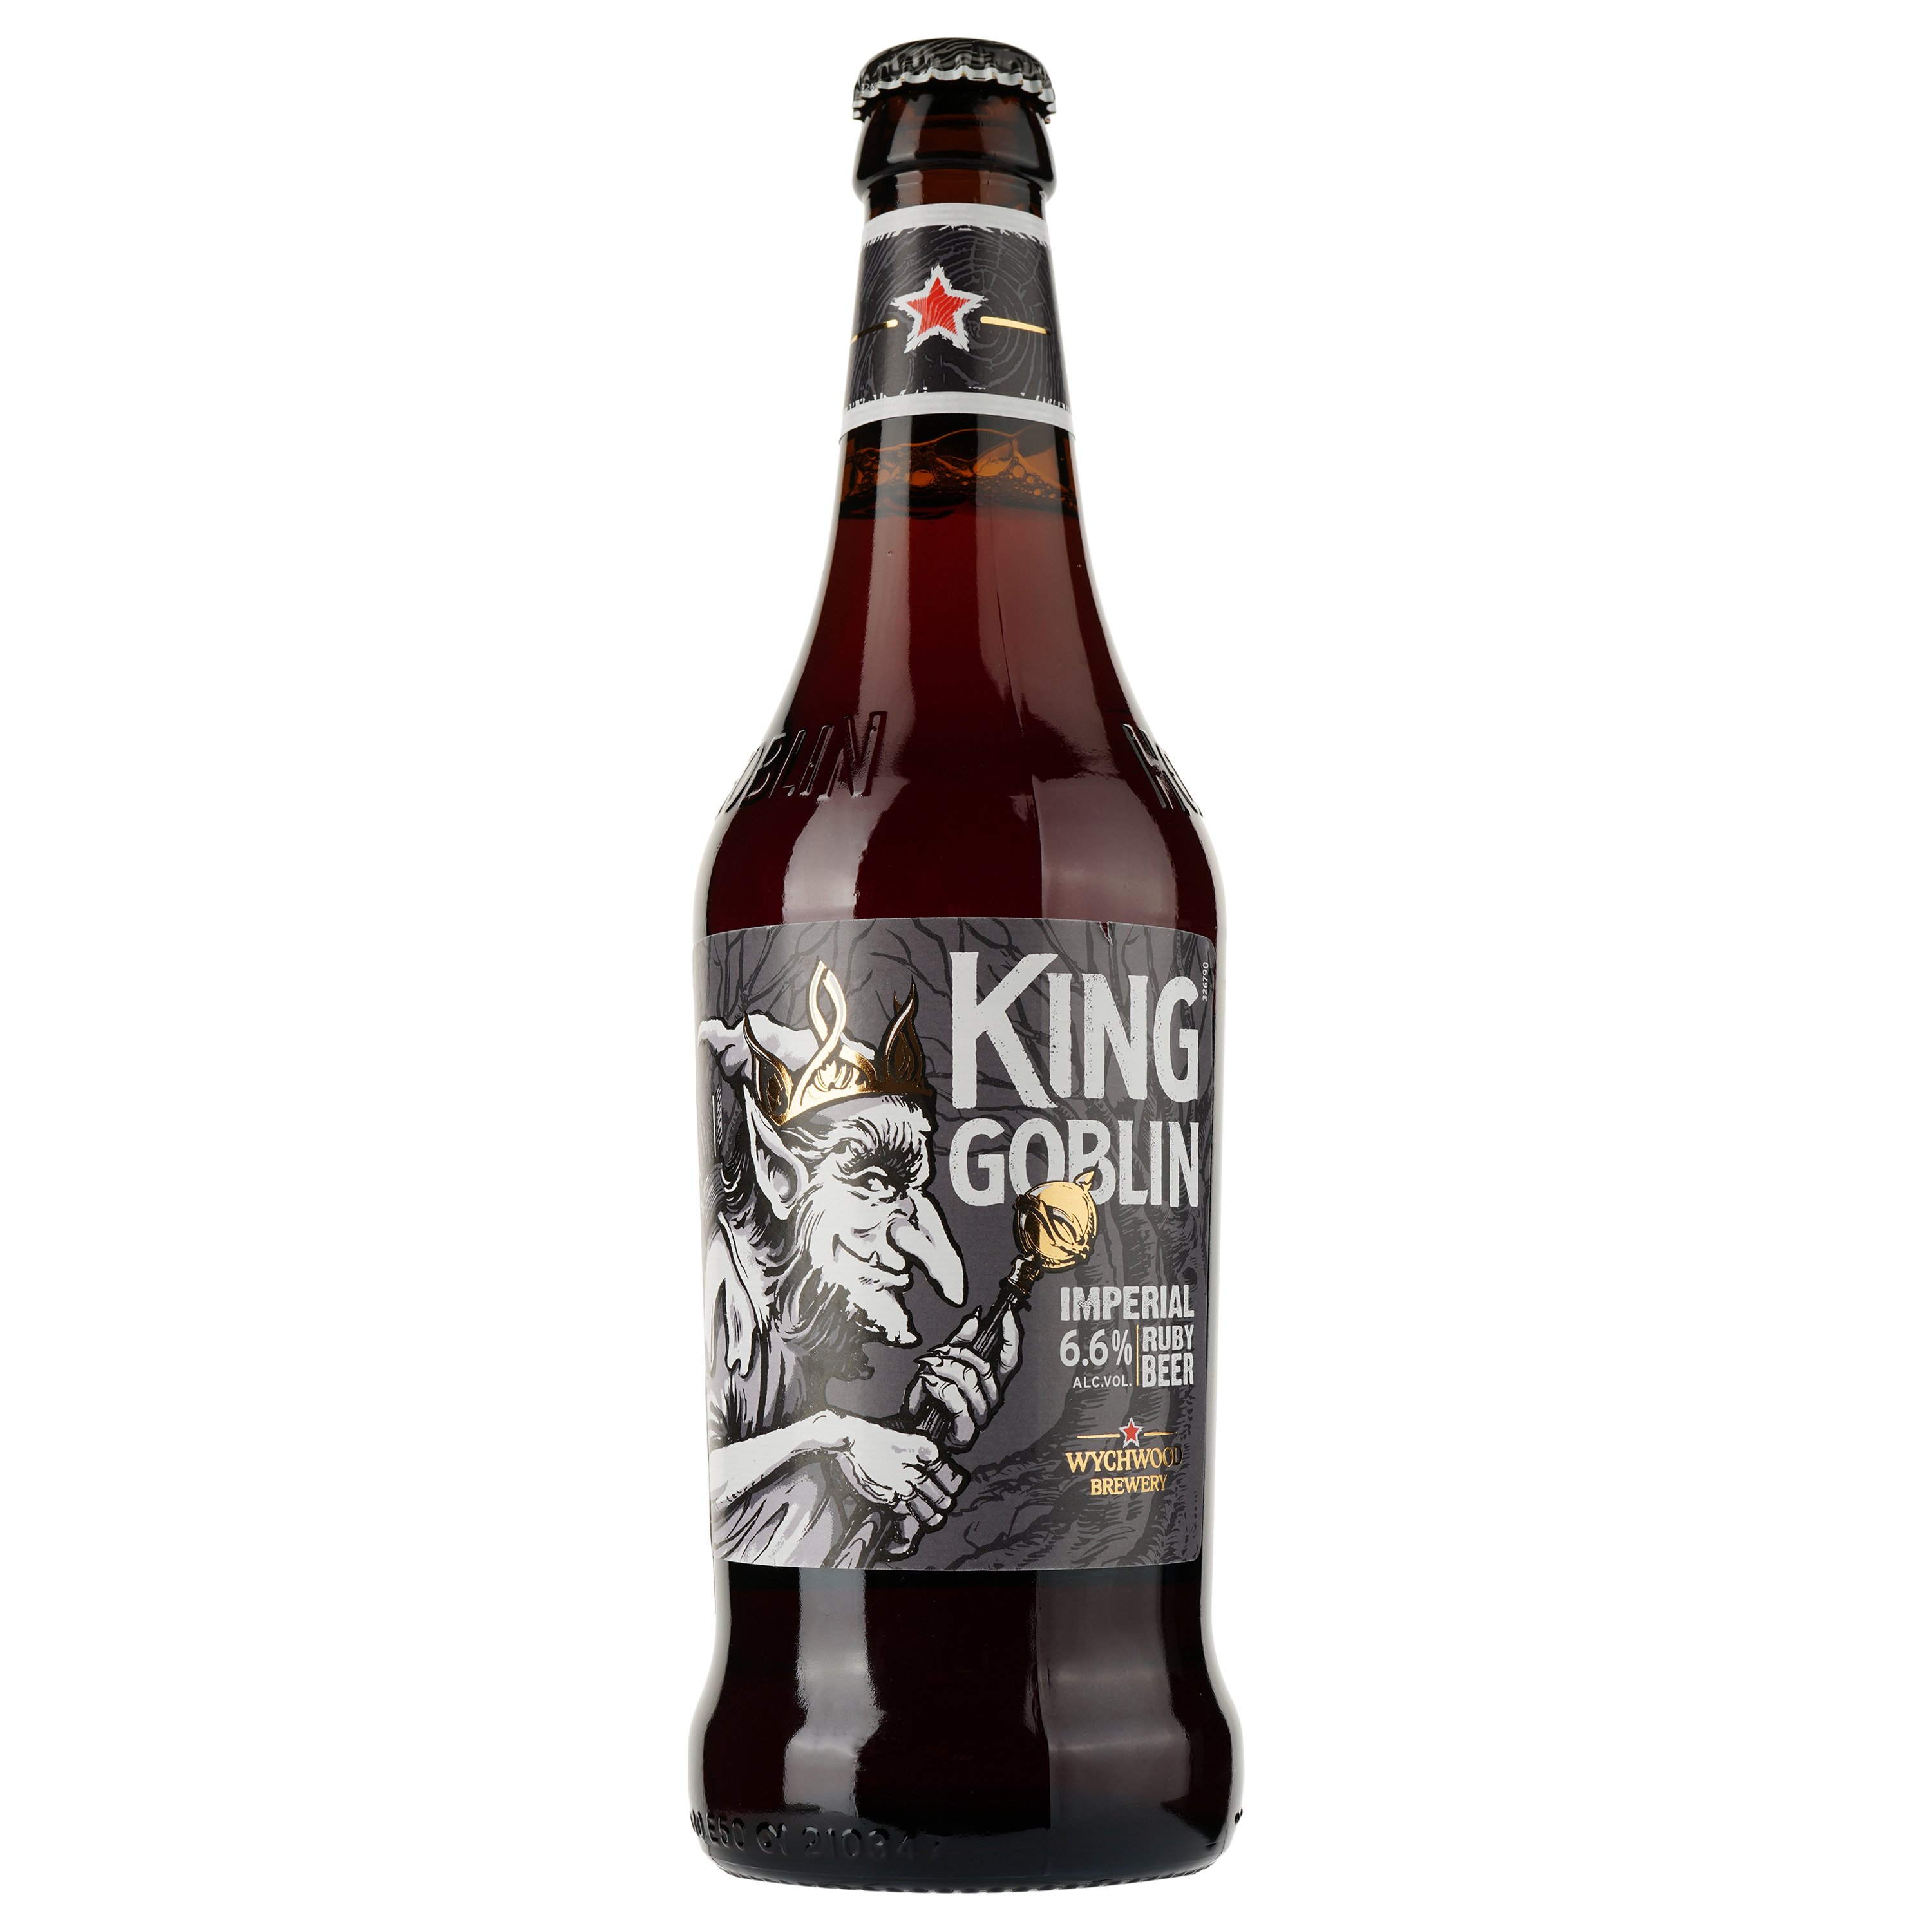 Пиво Wychwood Brewery King Goblin темное, 6,6%, 0,5 л (693691) - фото 1